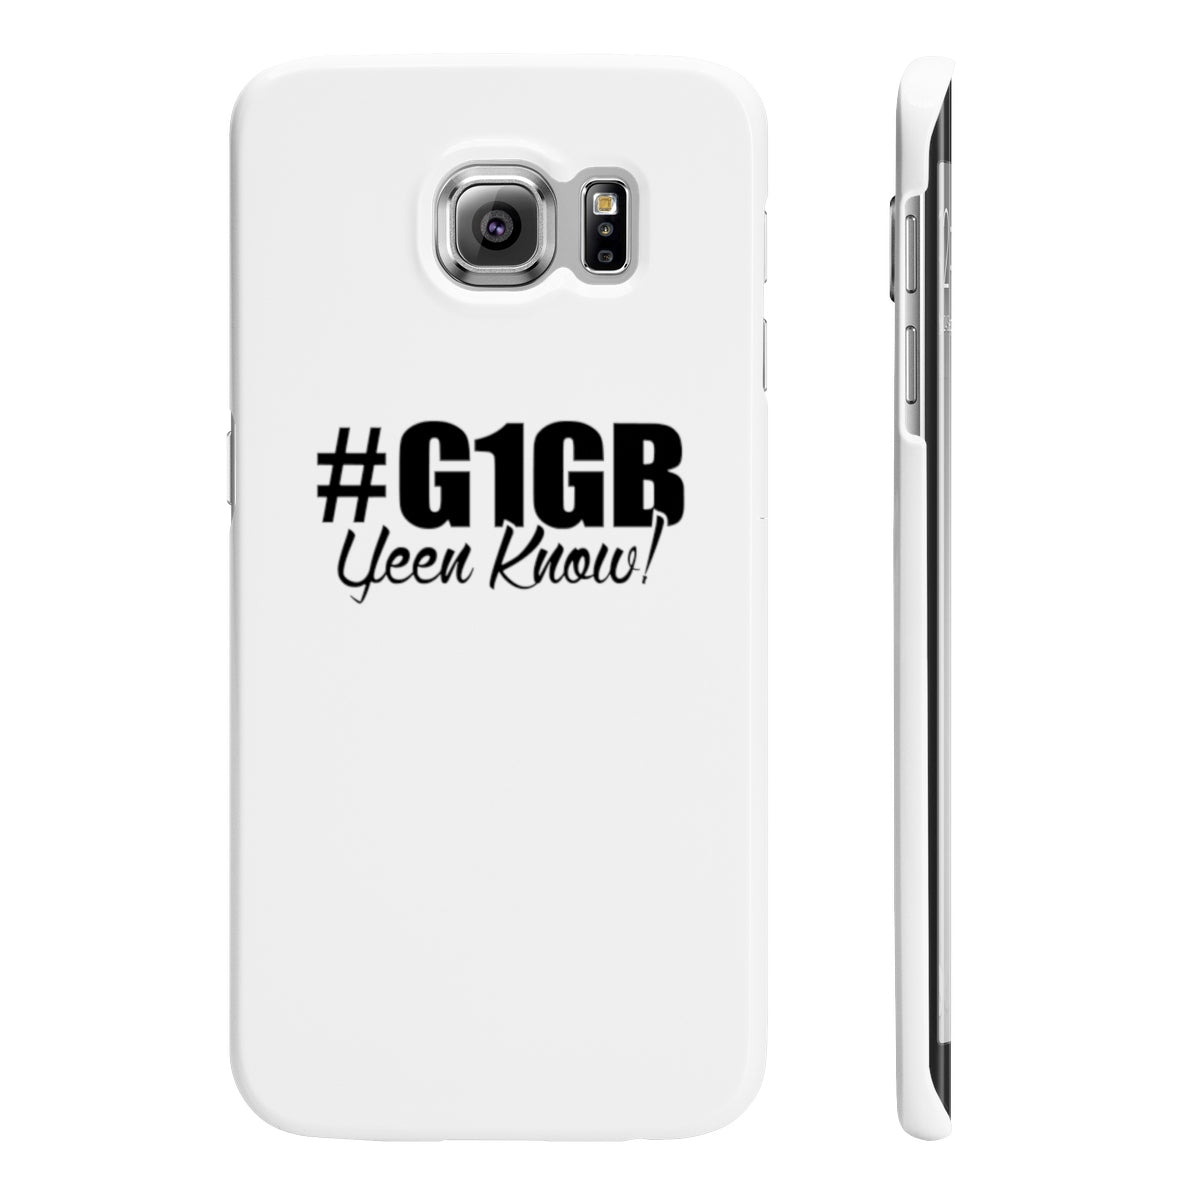 White #G1GB Phone Case